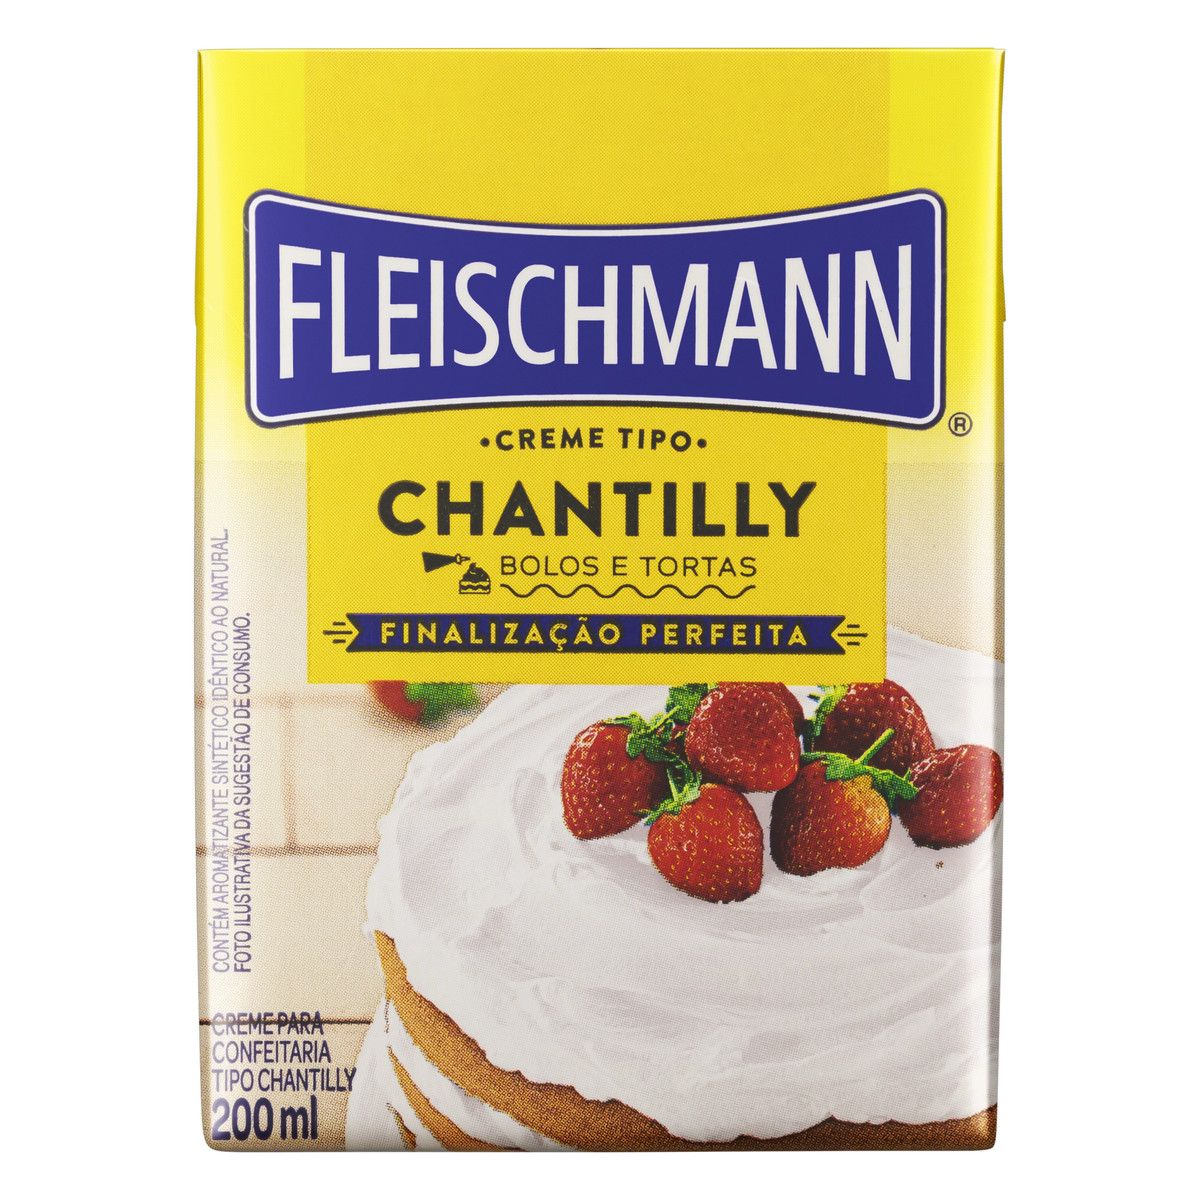 Creme Chantilly Fleischmann Caixa 200ml